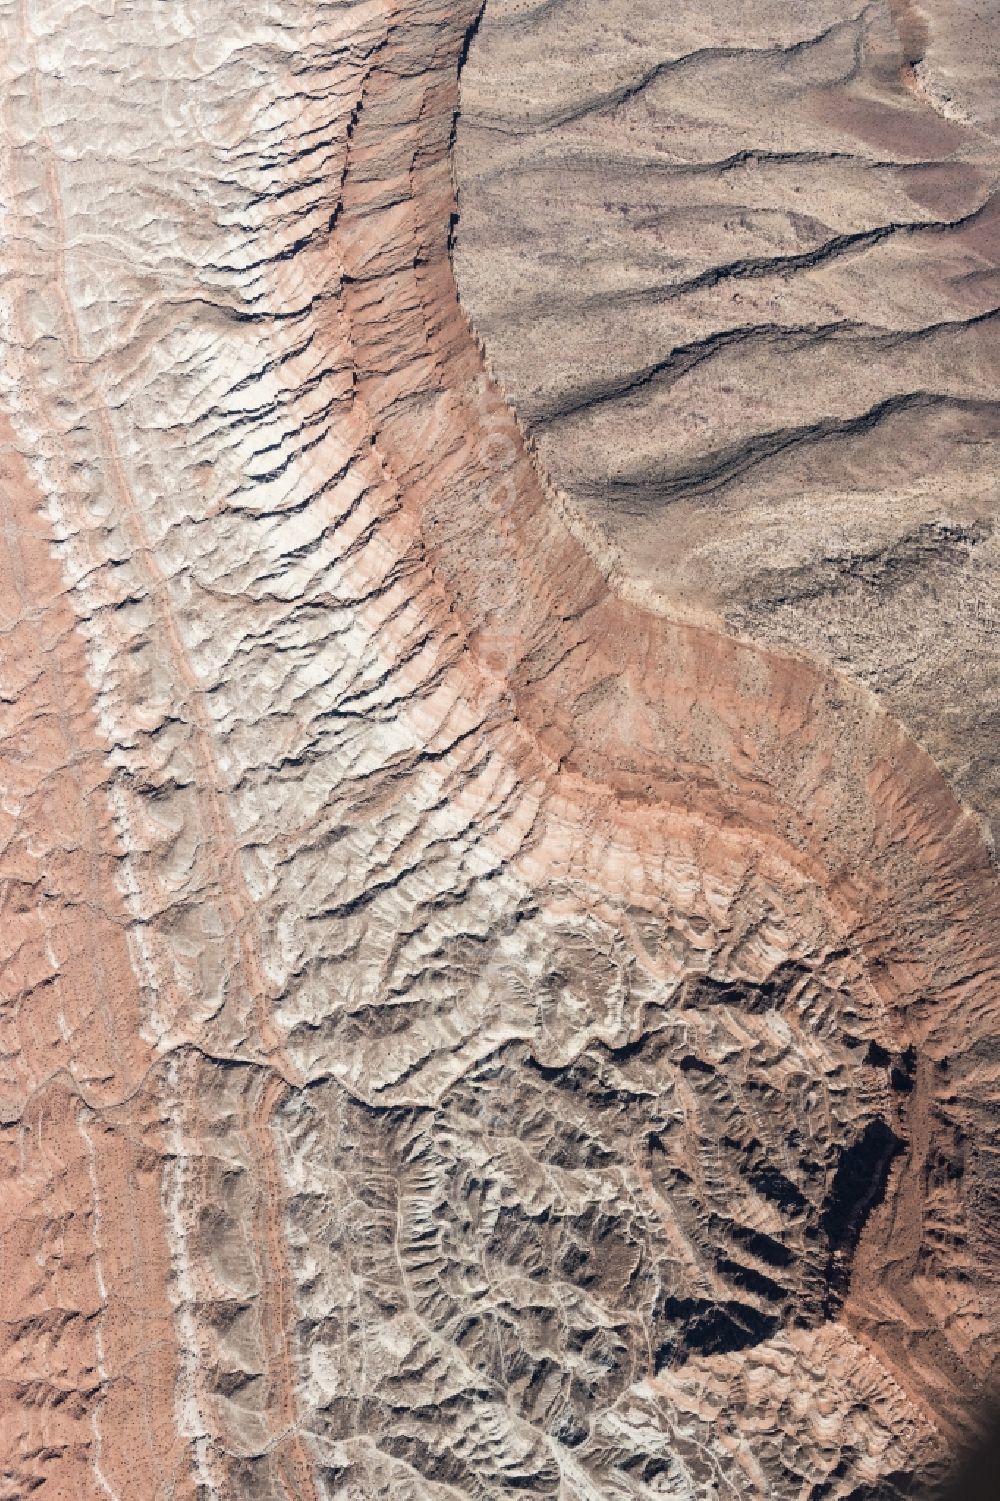 Aerial image Washington - Rock and mountain landscape in Washington in Utah, United States of America